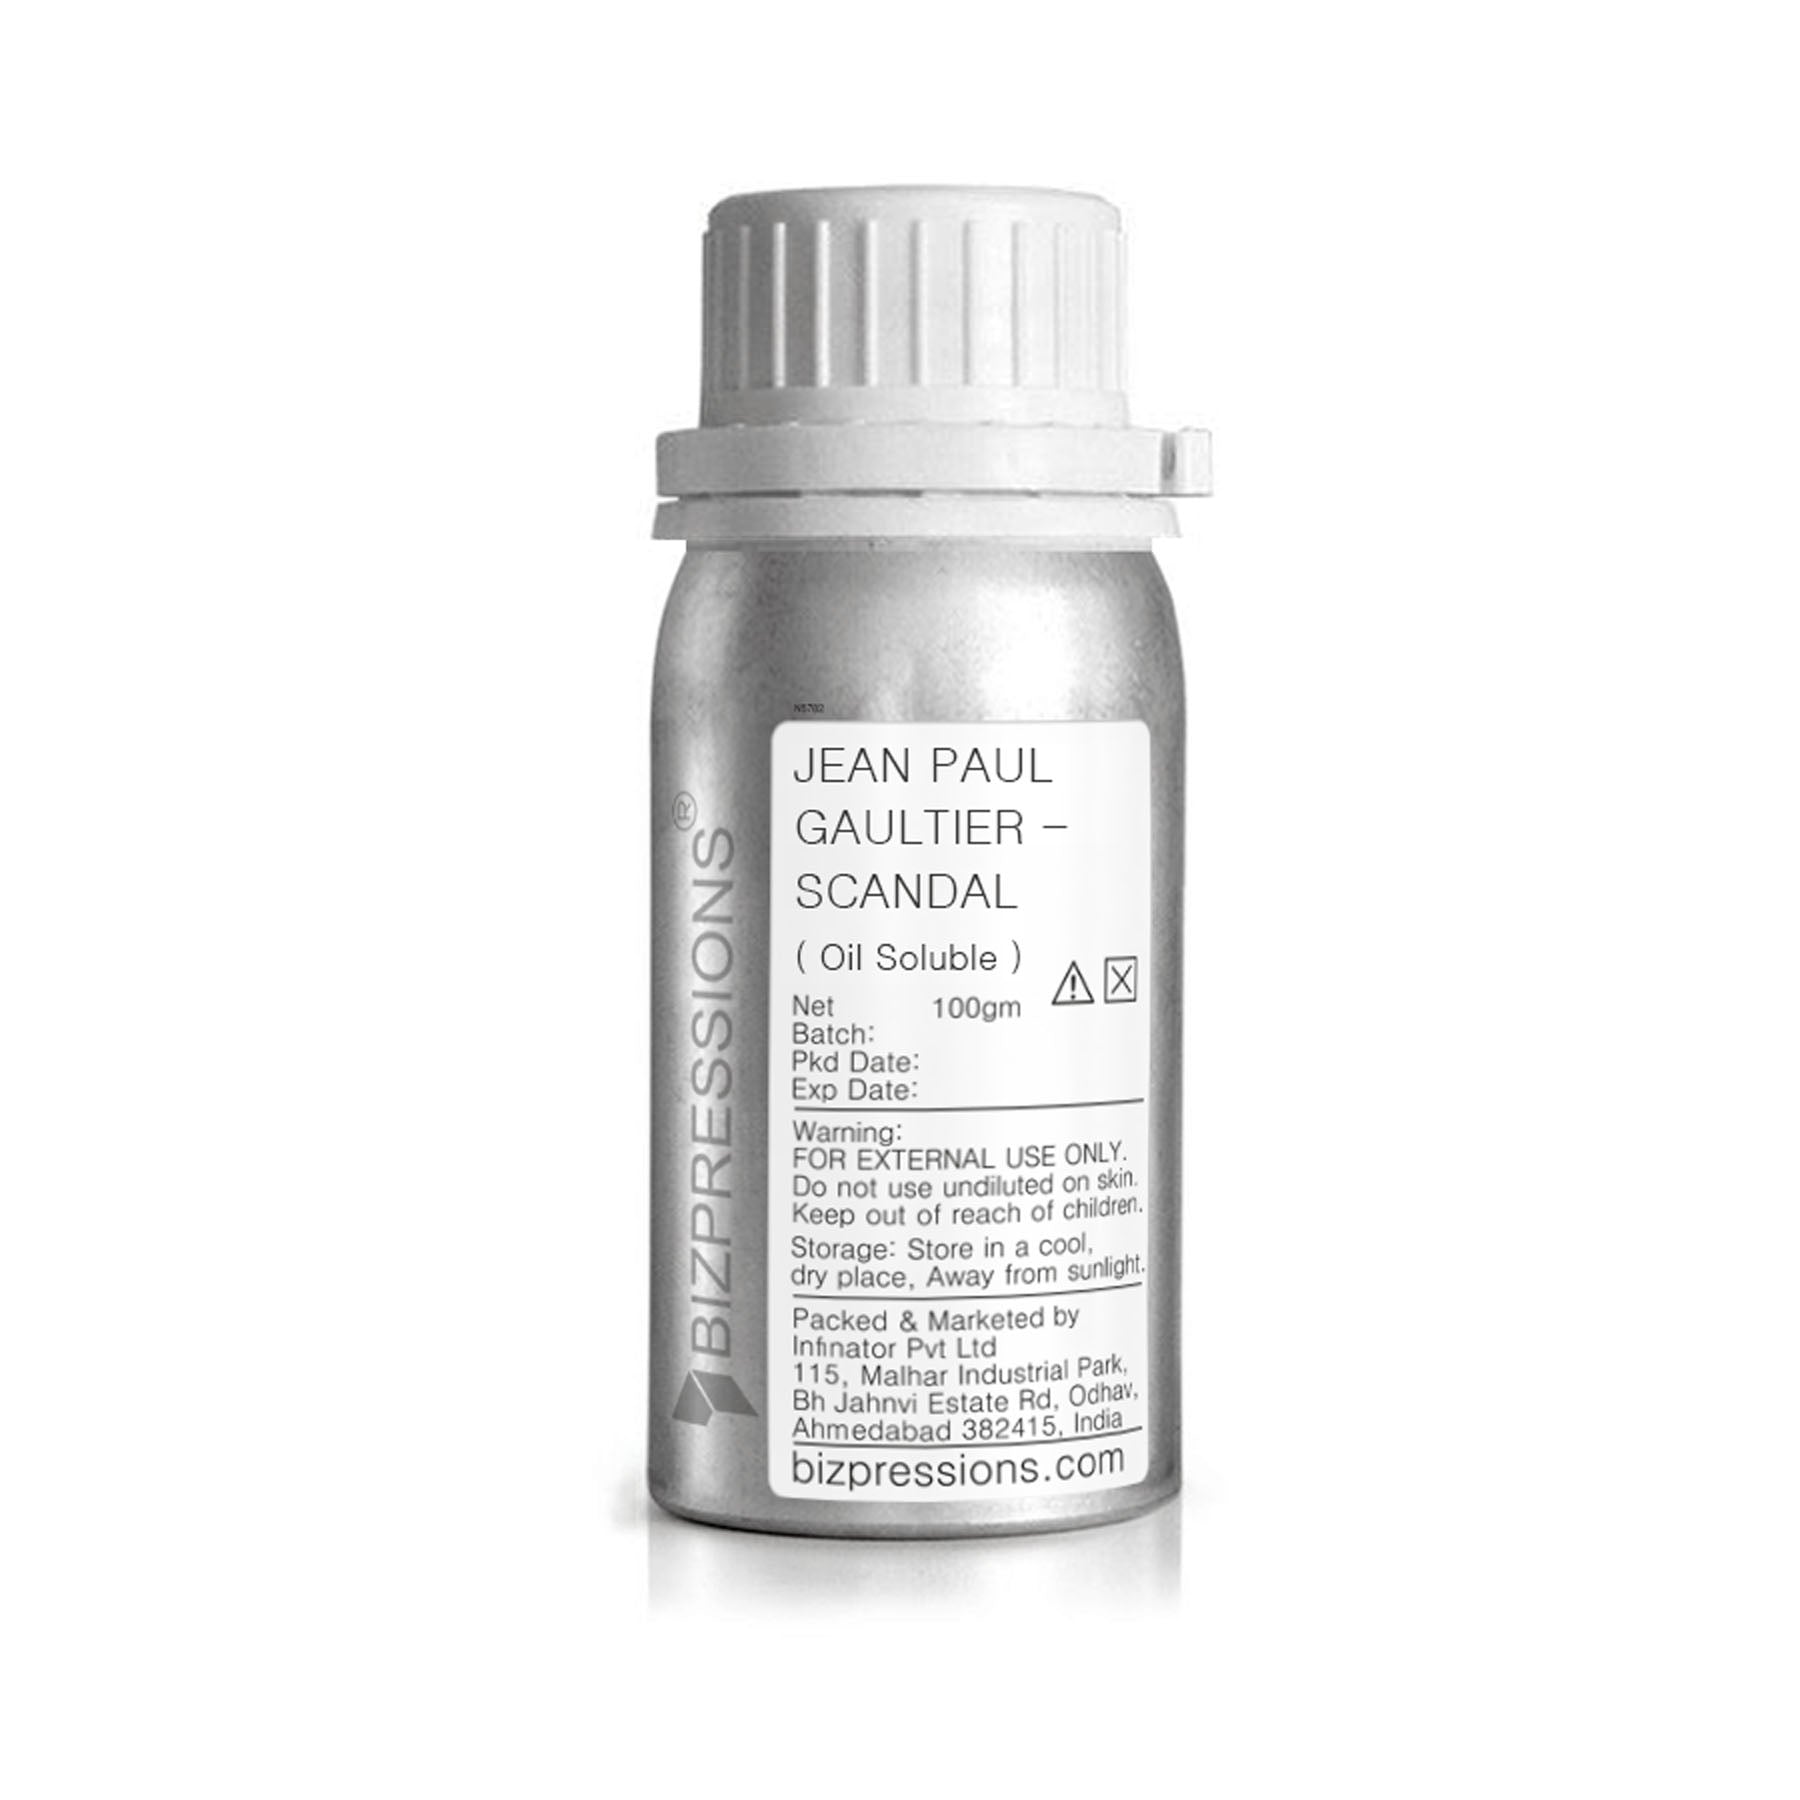 JEAN PAUL GAULTIER - SCANDAL - Fragrance ( Oil Soluble ) - 100 gm